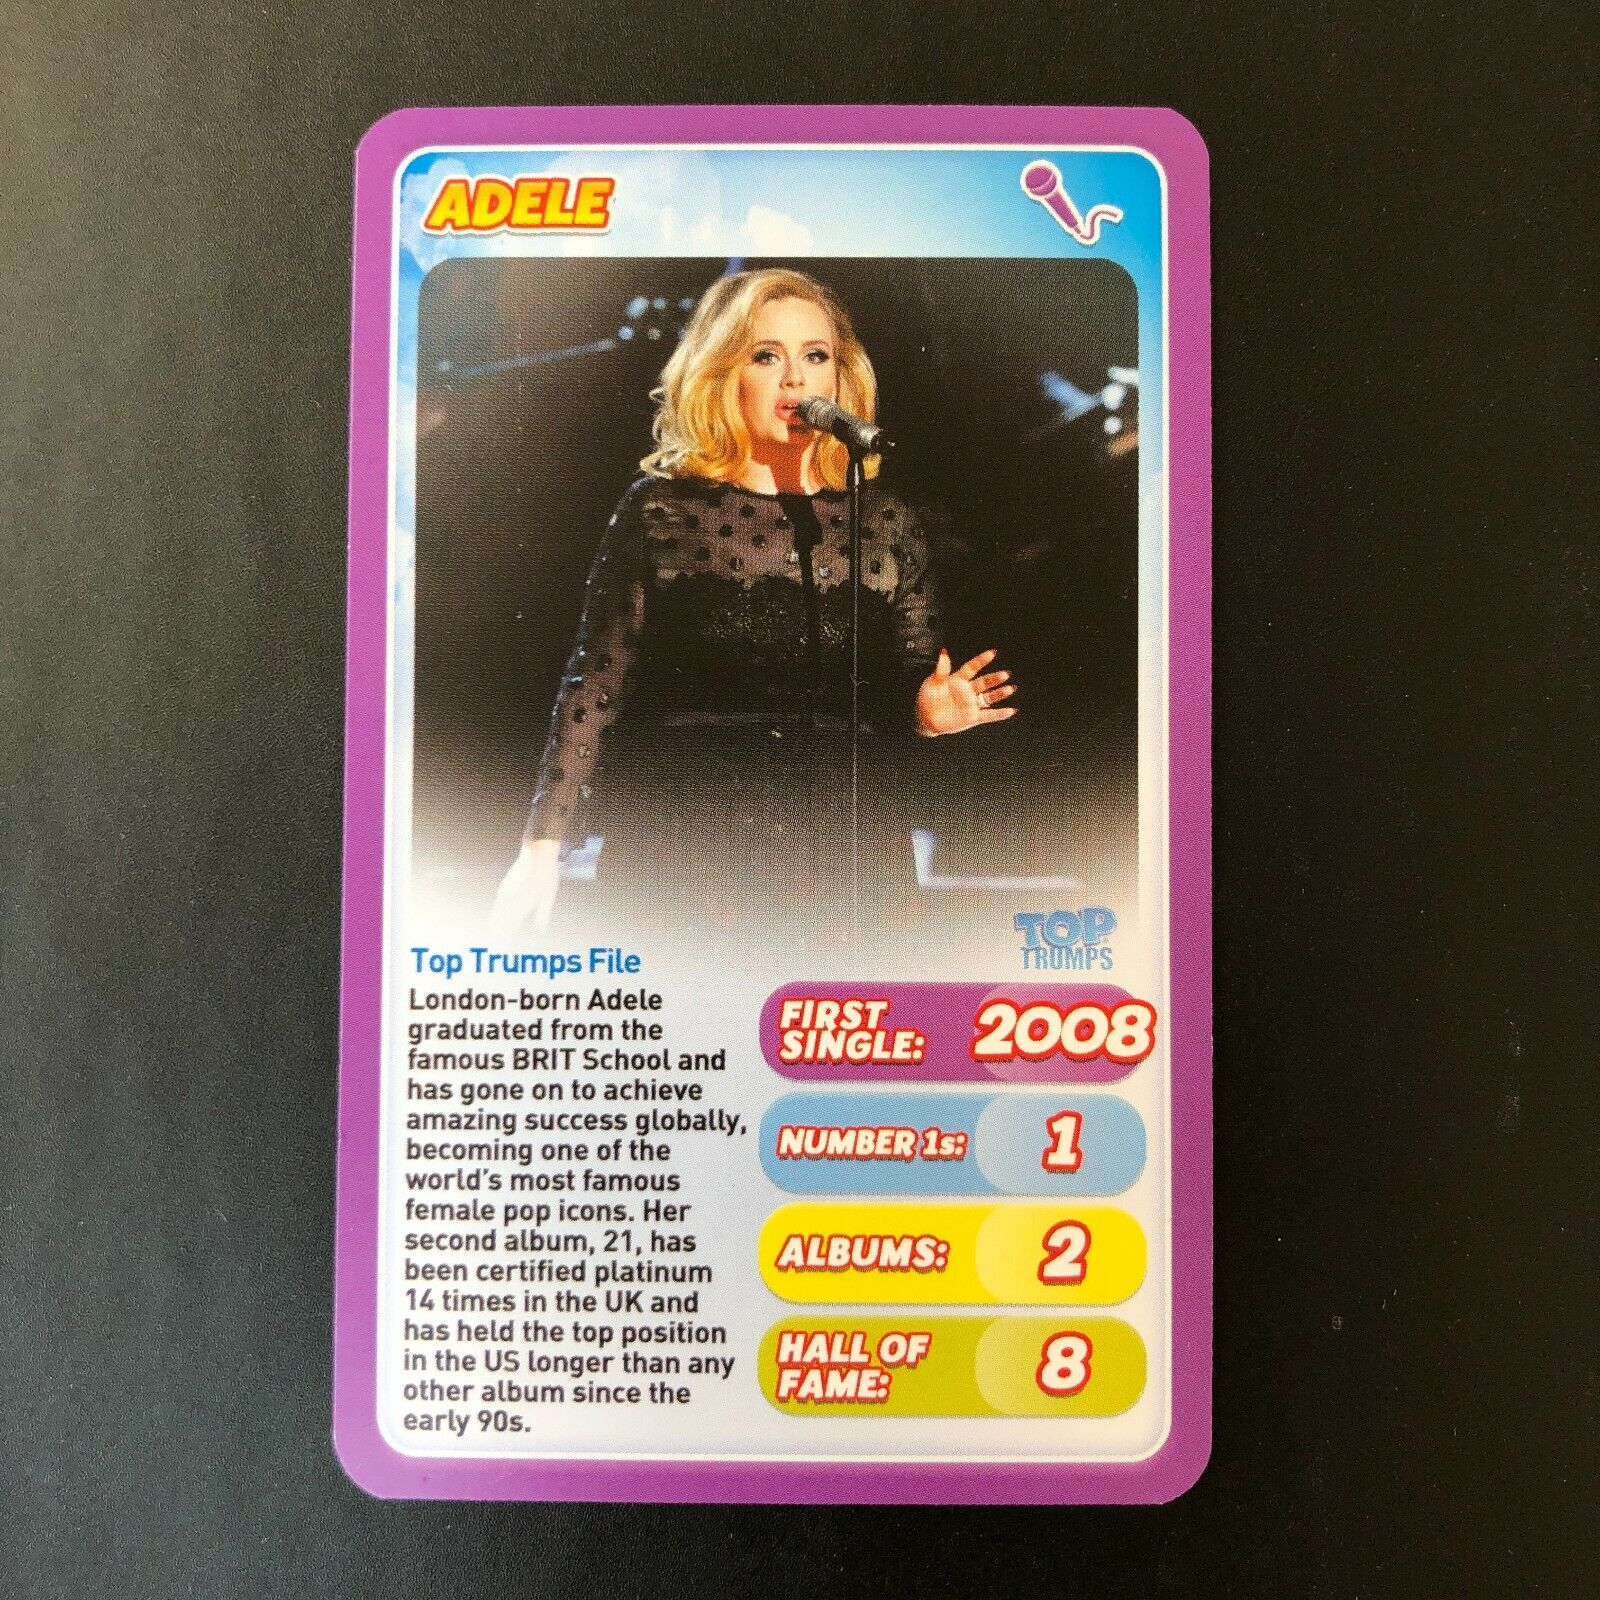 Top Trumps Tournament Pop Stars Adele Music Entertainment Celebrity Card (B)